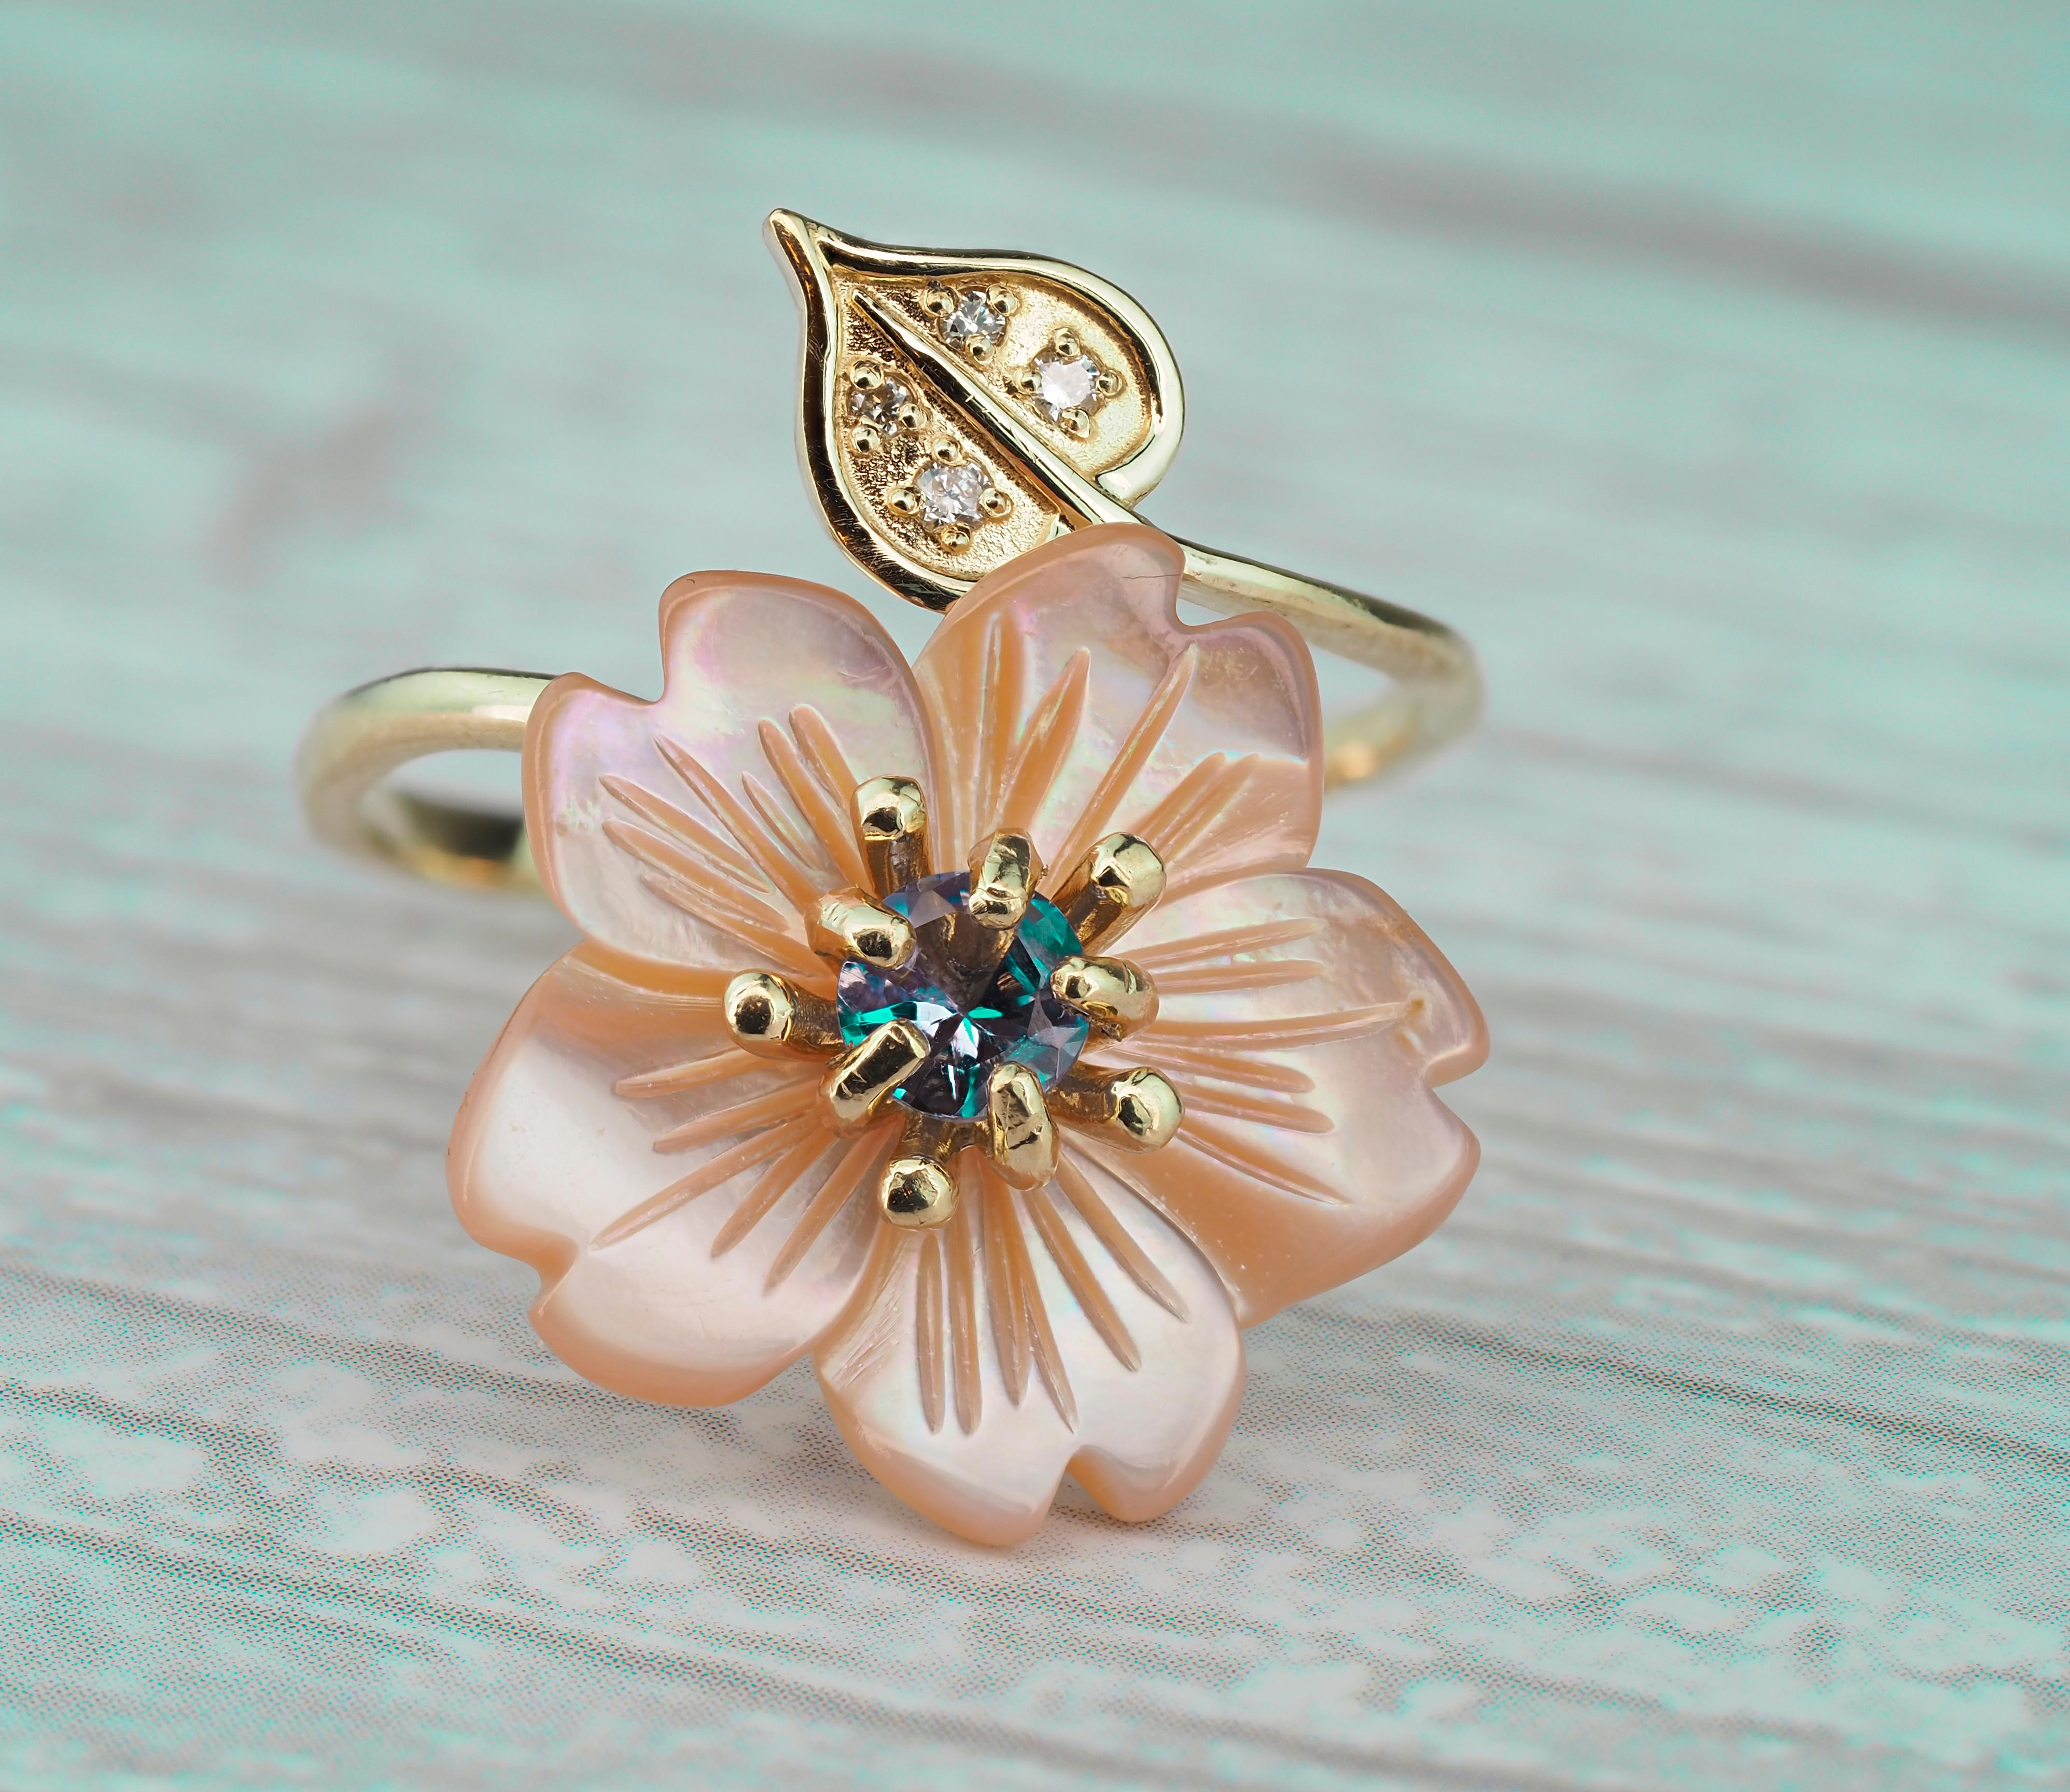 For Sale:  Carved Flower 14k ring with gemstones.  6